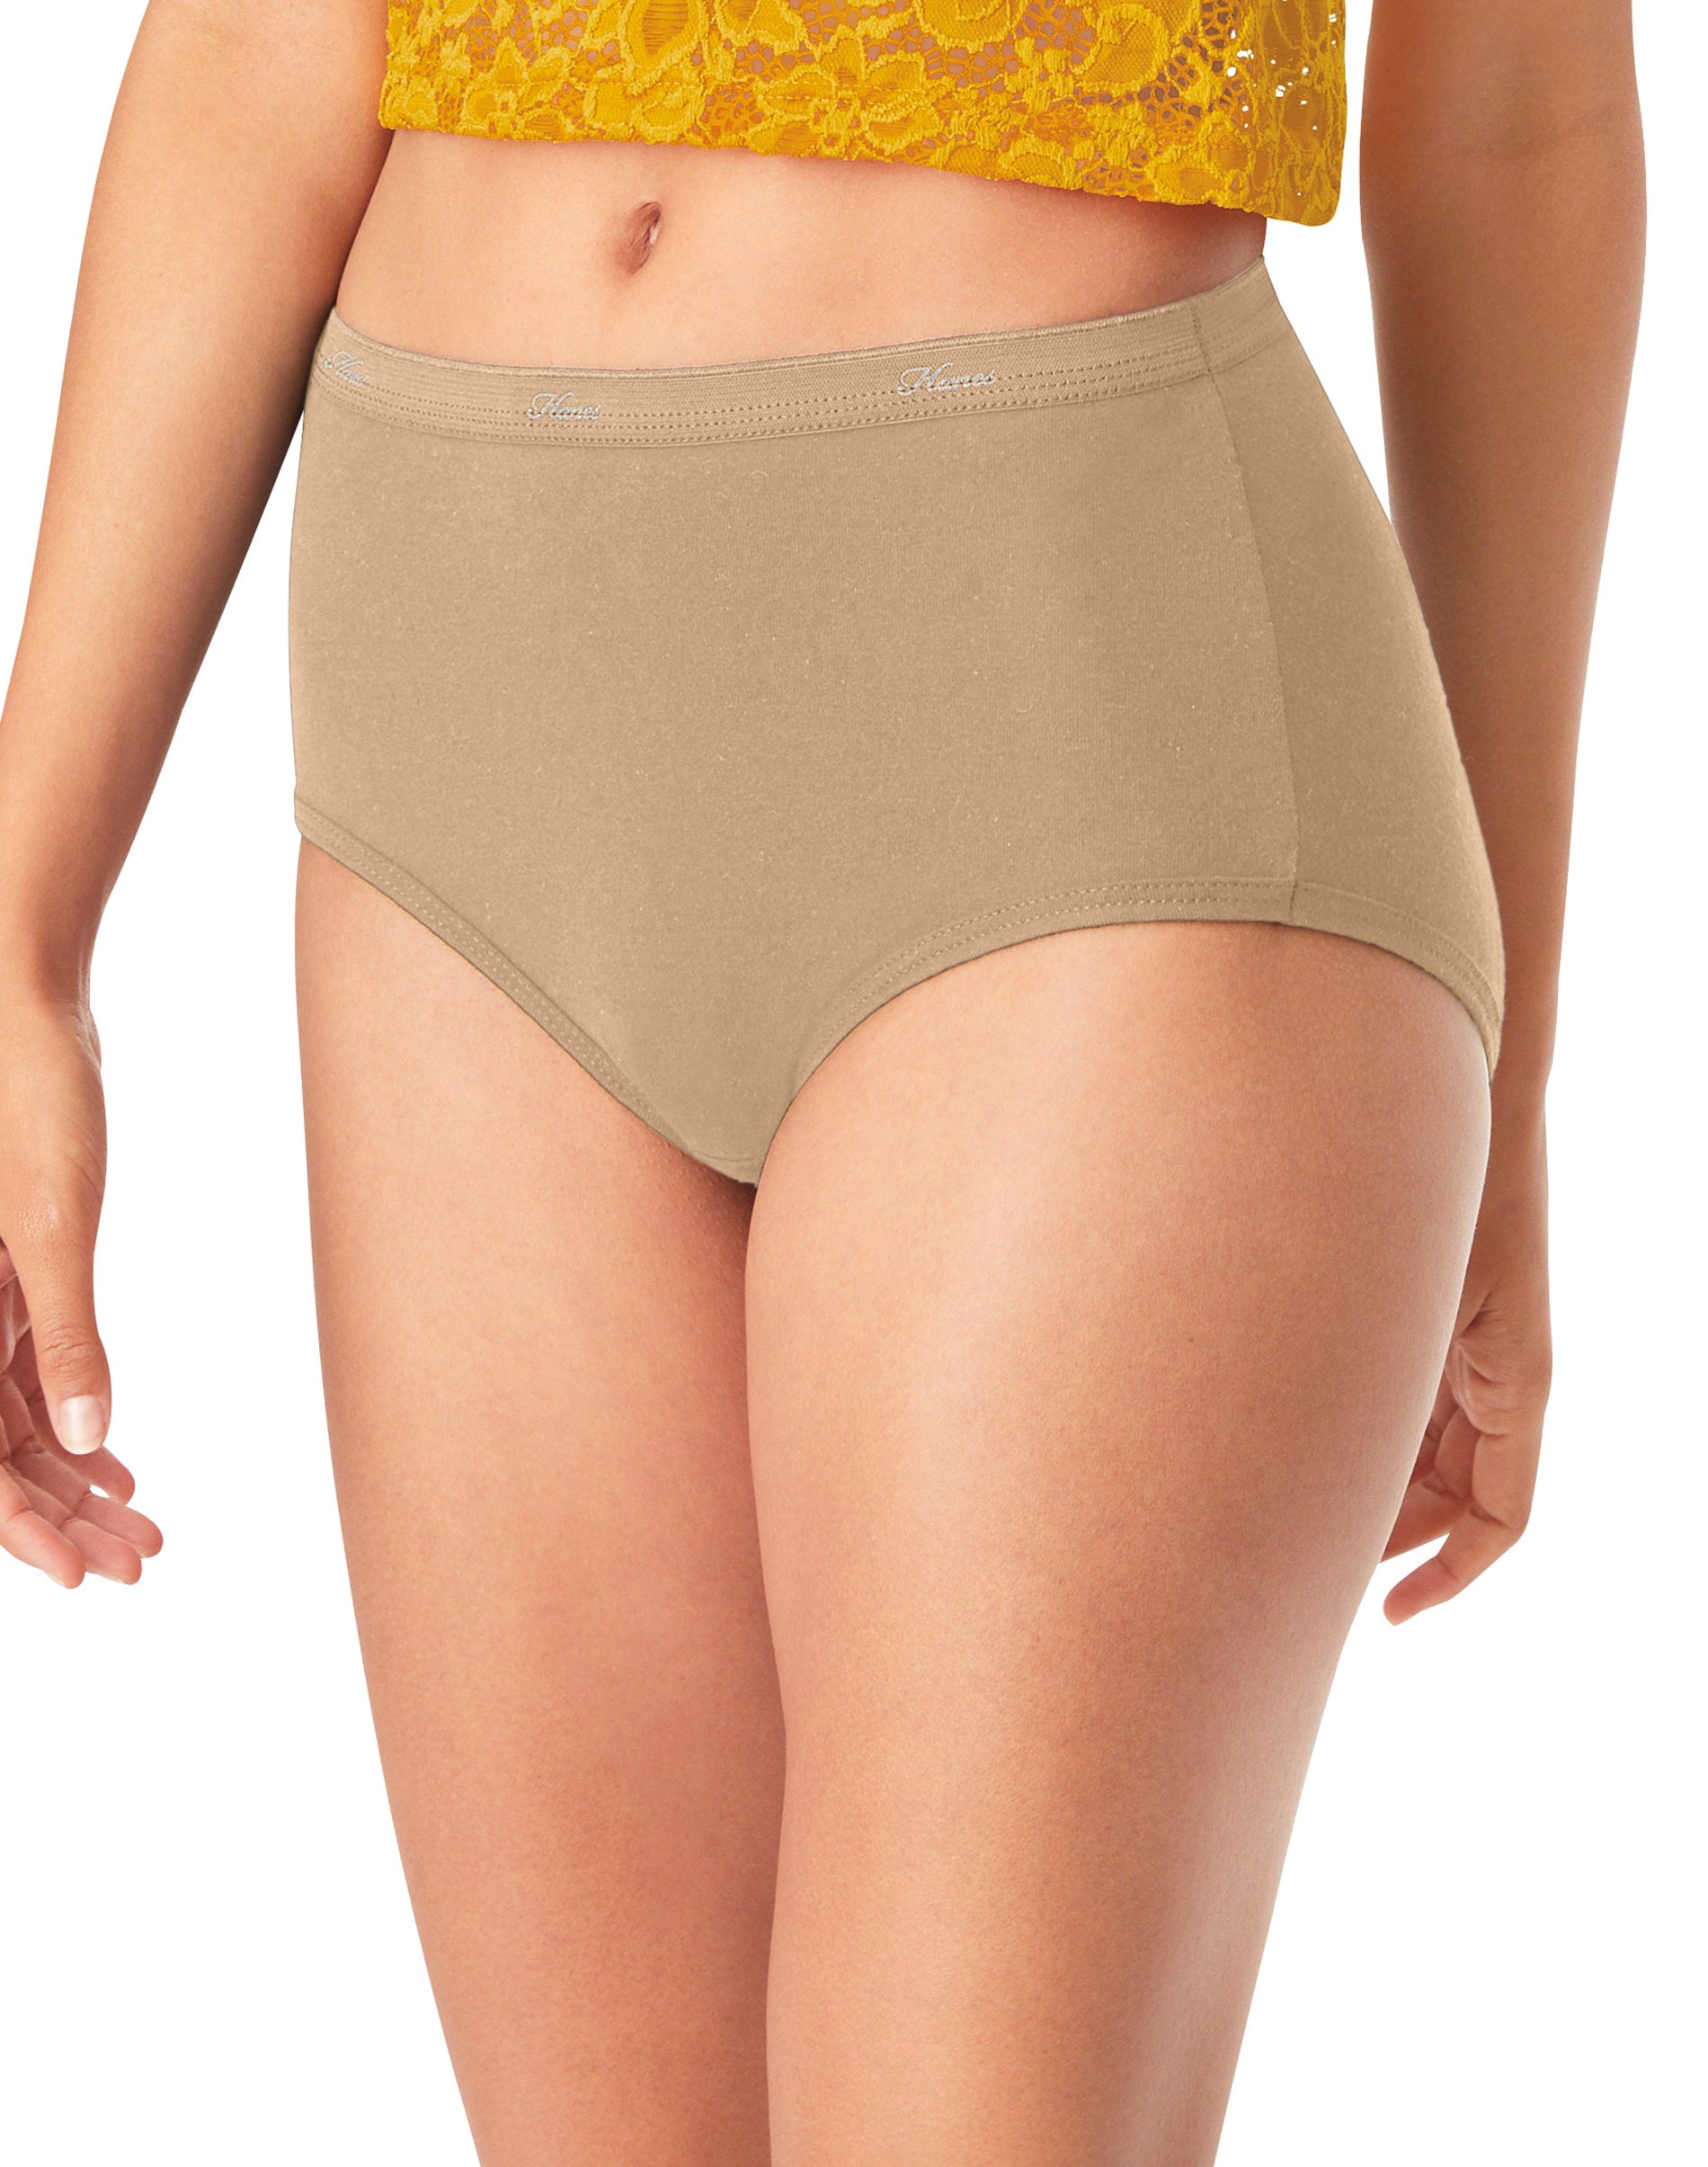 Hanes Classics Women's Panties 4-Pack No Ride Up High Cut Cotton Underwear  Sz. 6